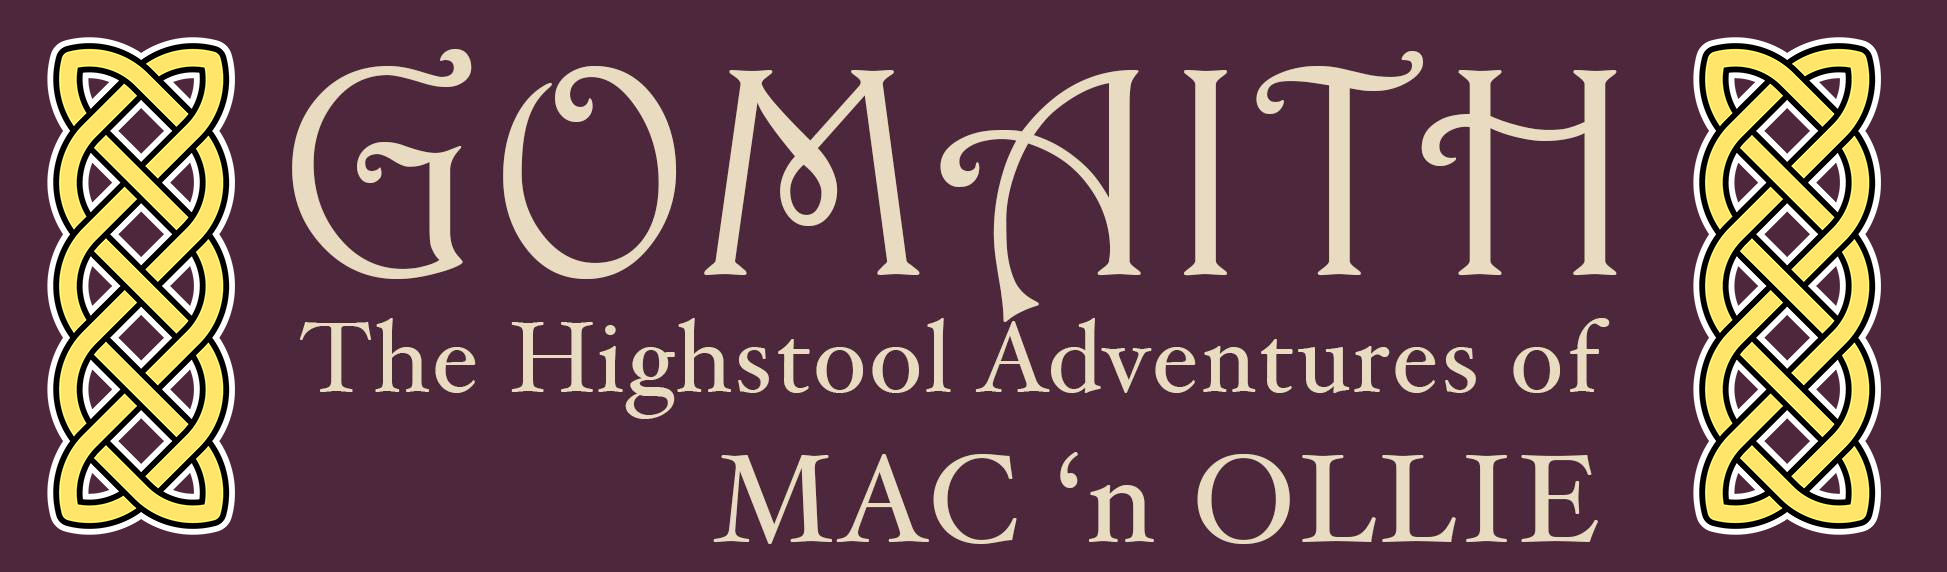 Header Banner for Gomaith - The Highstool Adventures of Mac n' Ollie, Irish, Gaelic, Comic Strip